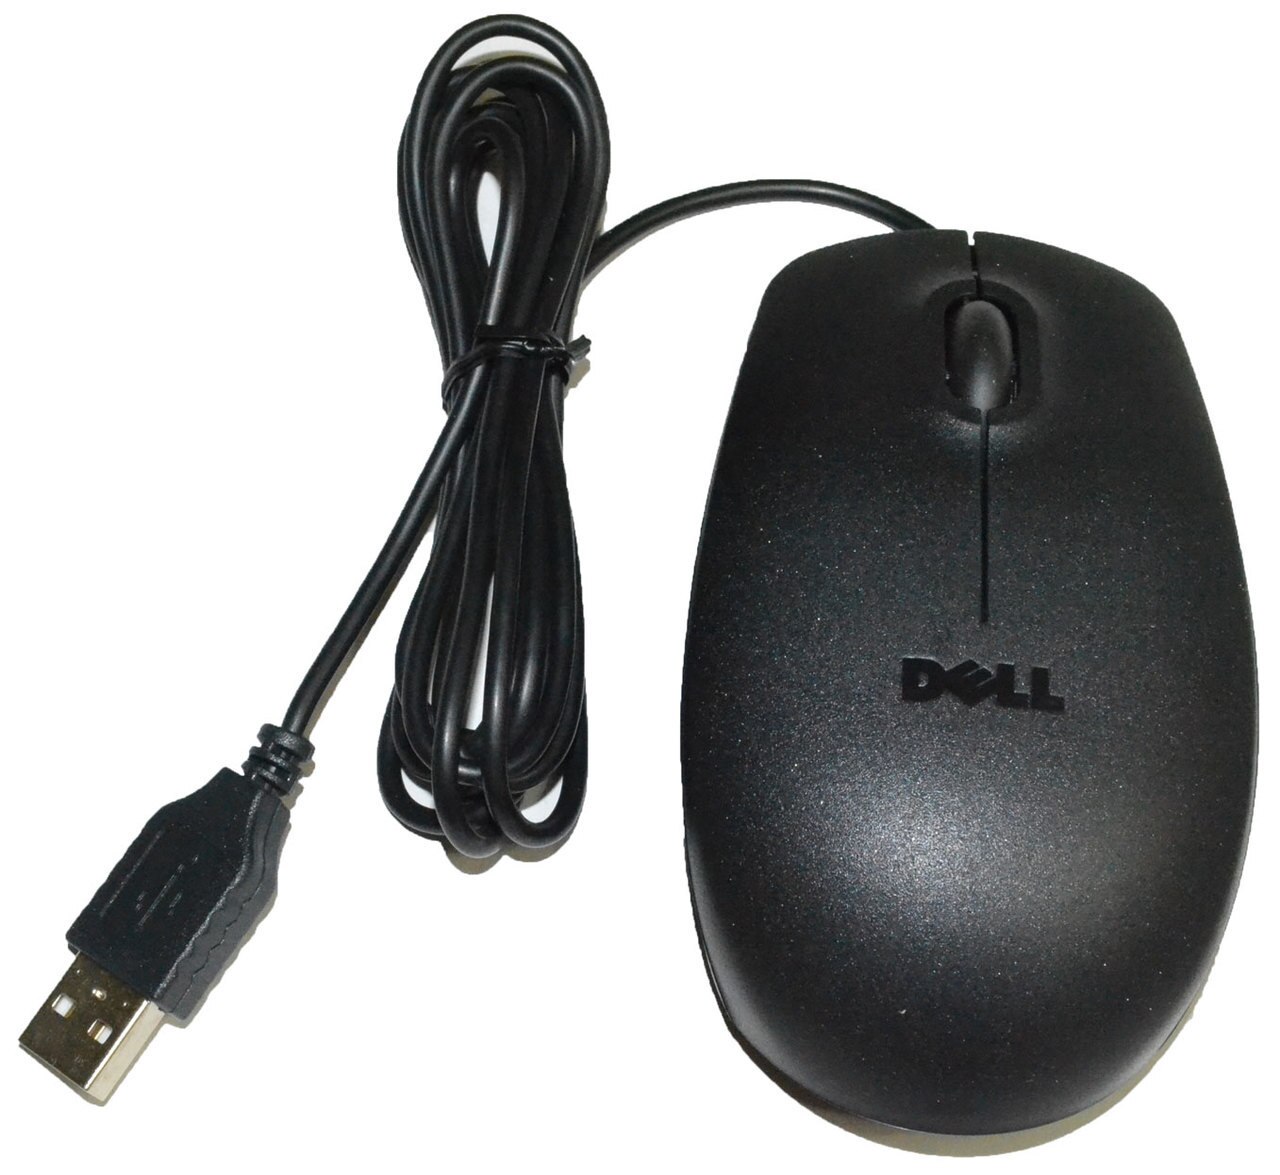 MOUSE DELL USB BLACK 2-BUTTON